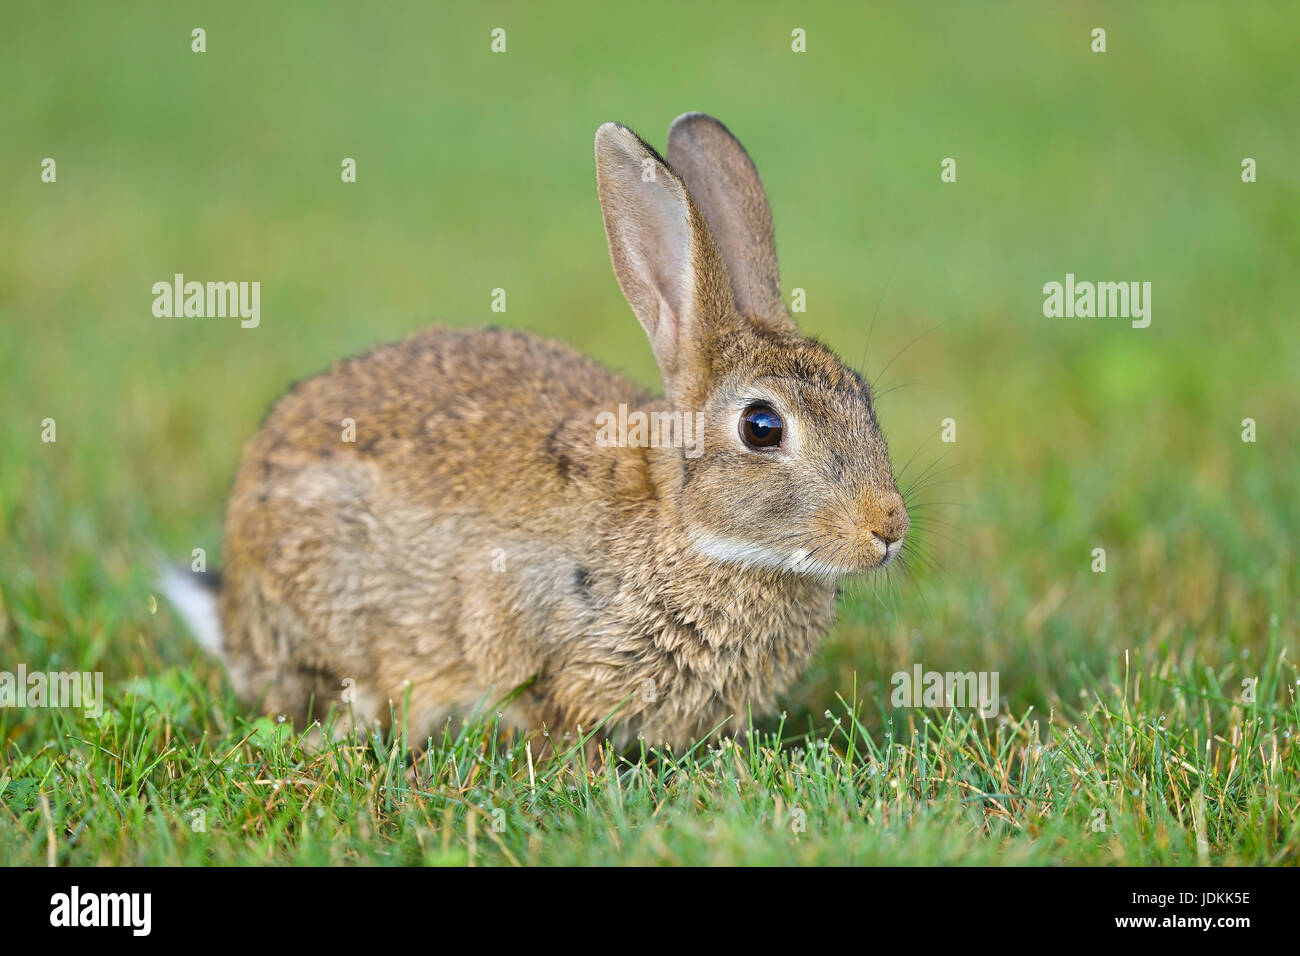 Wildkanichen (Oryctolagus cuniculus) rabbit Stock Photo